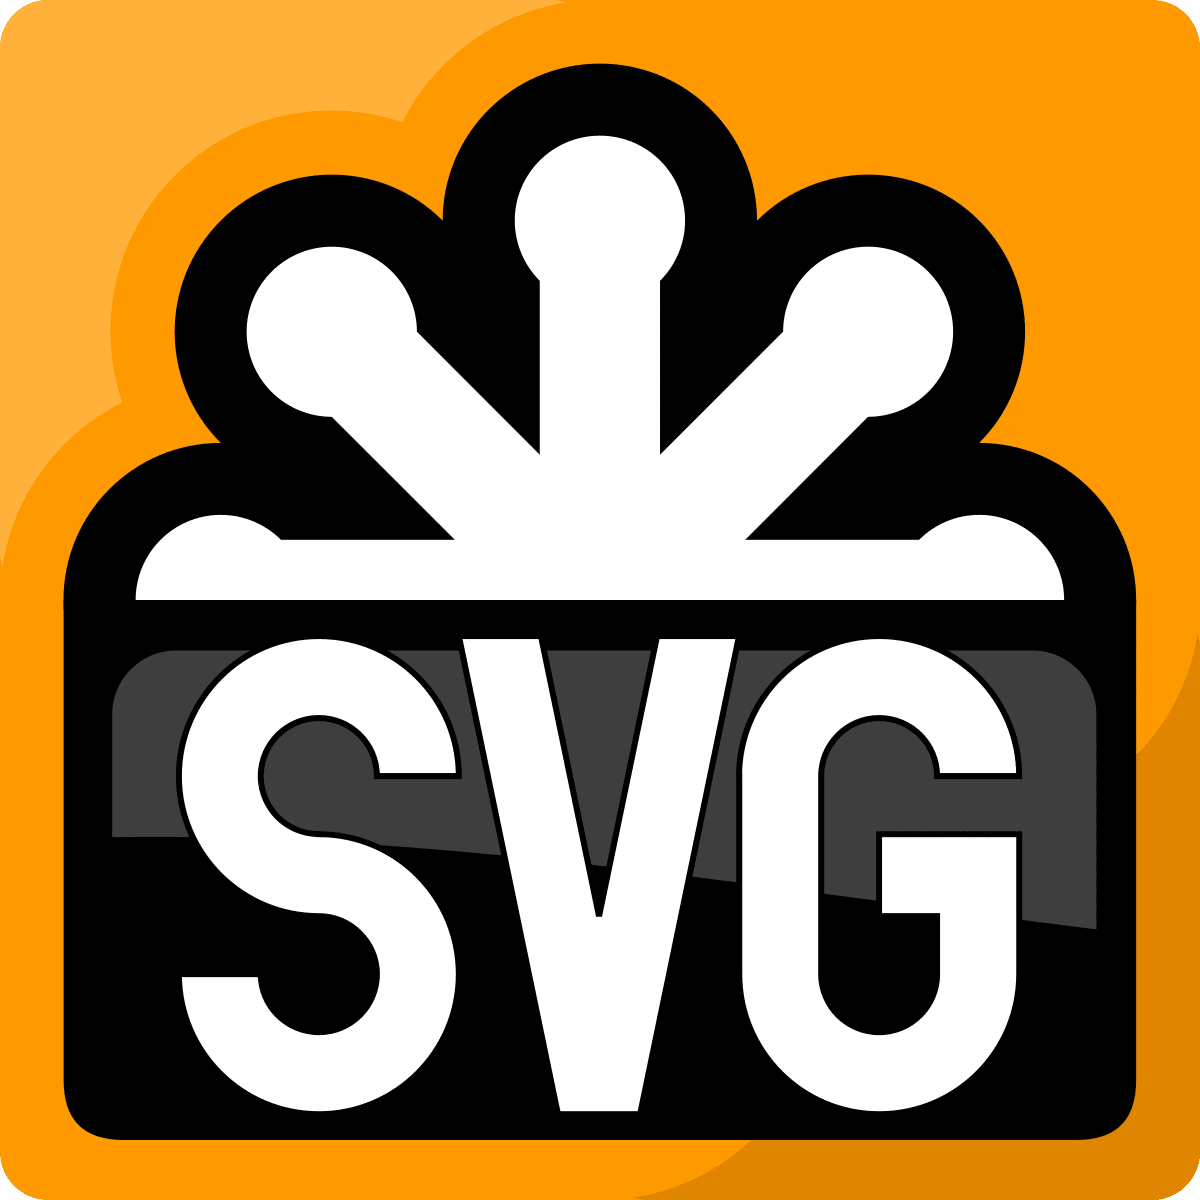 Image file types: SVG logo